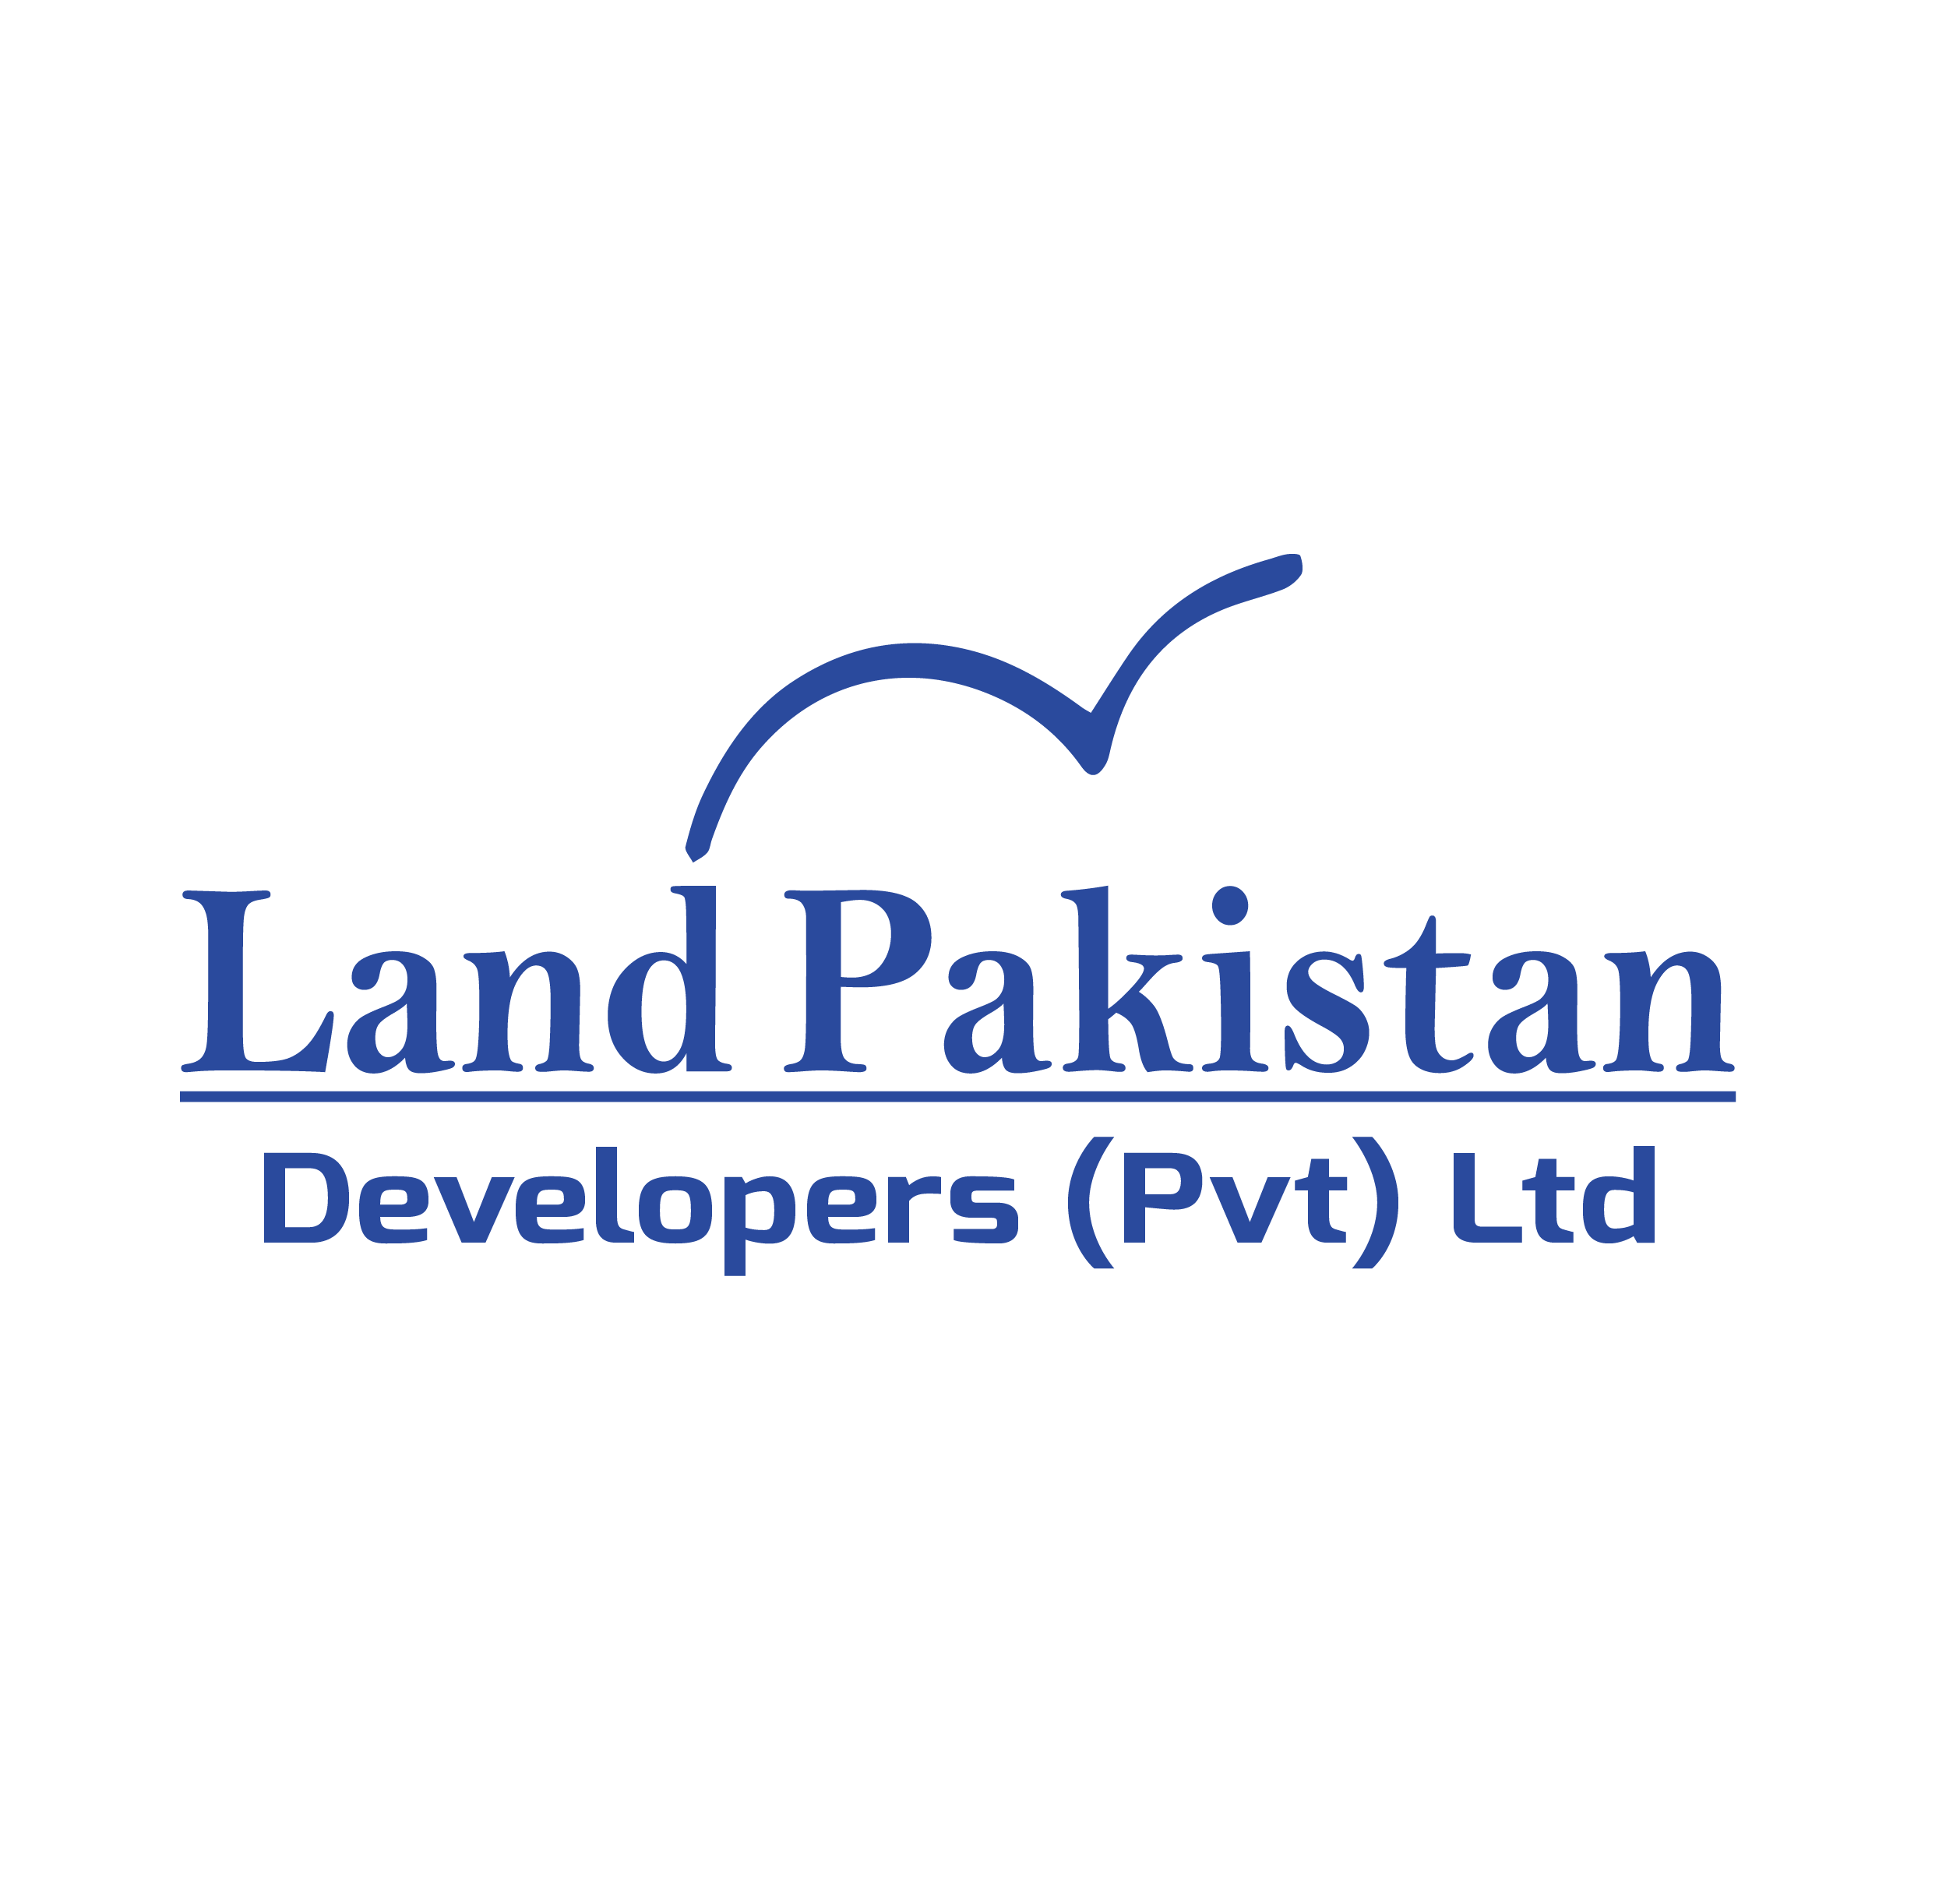 Land Pakistan Developers